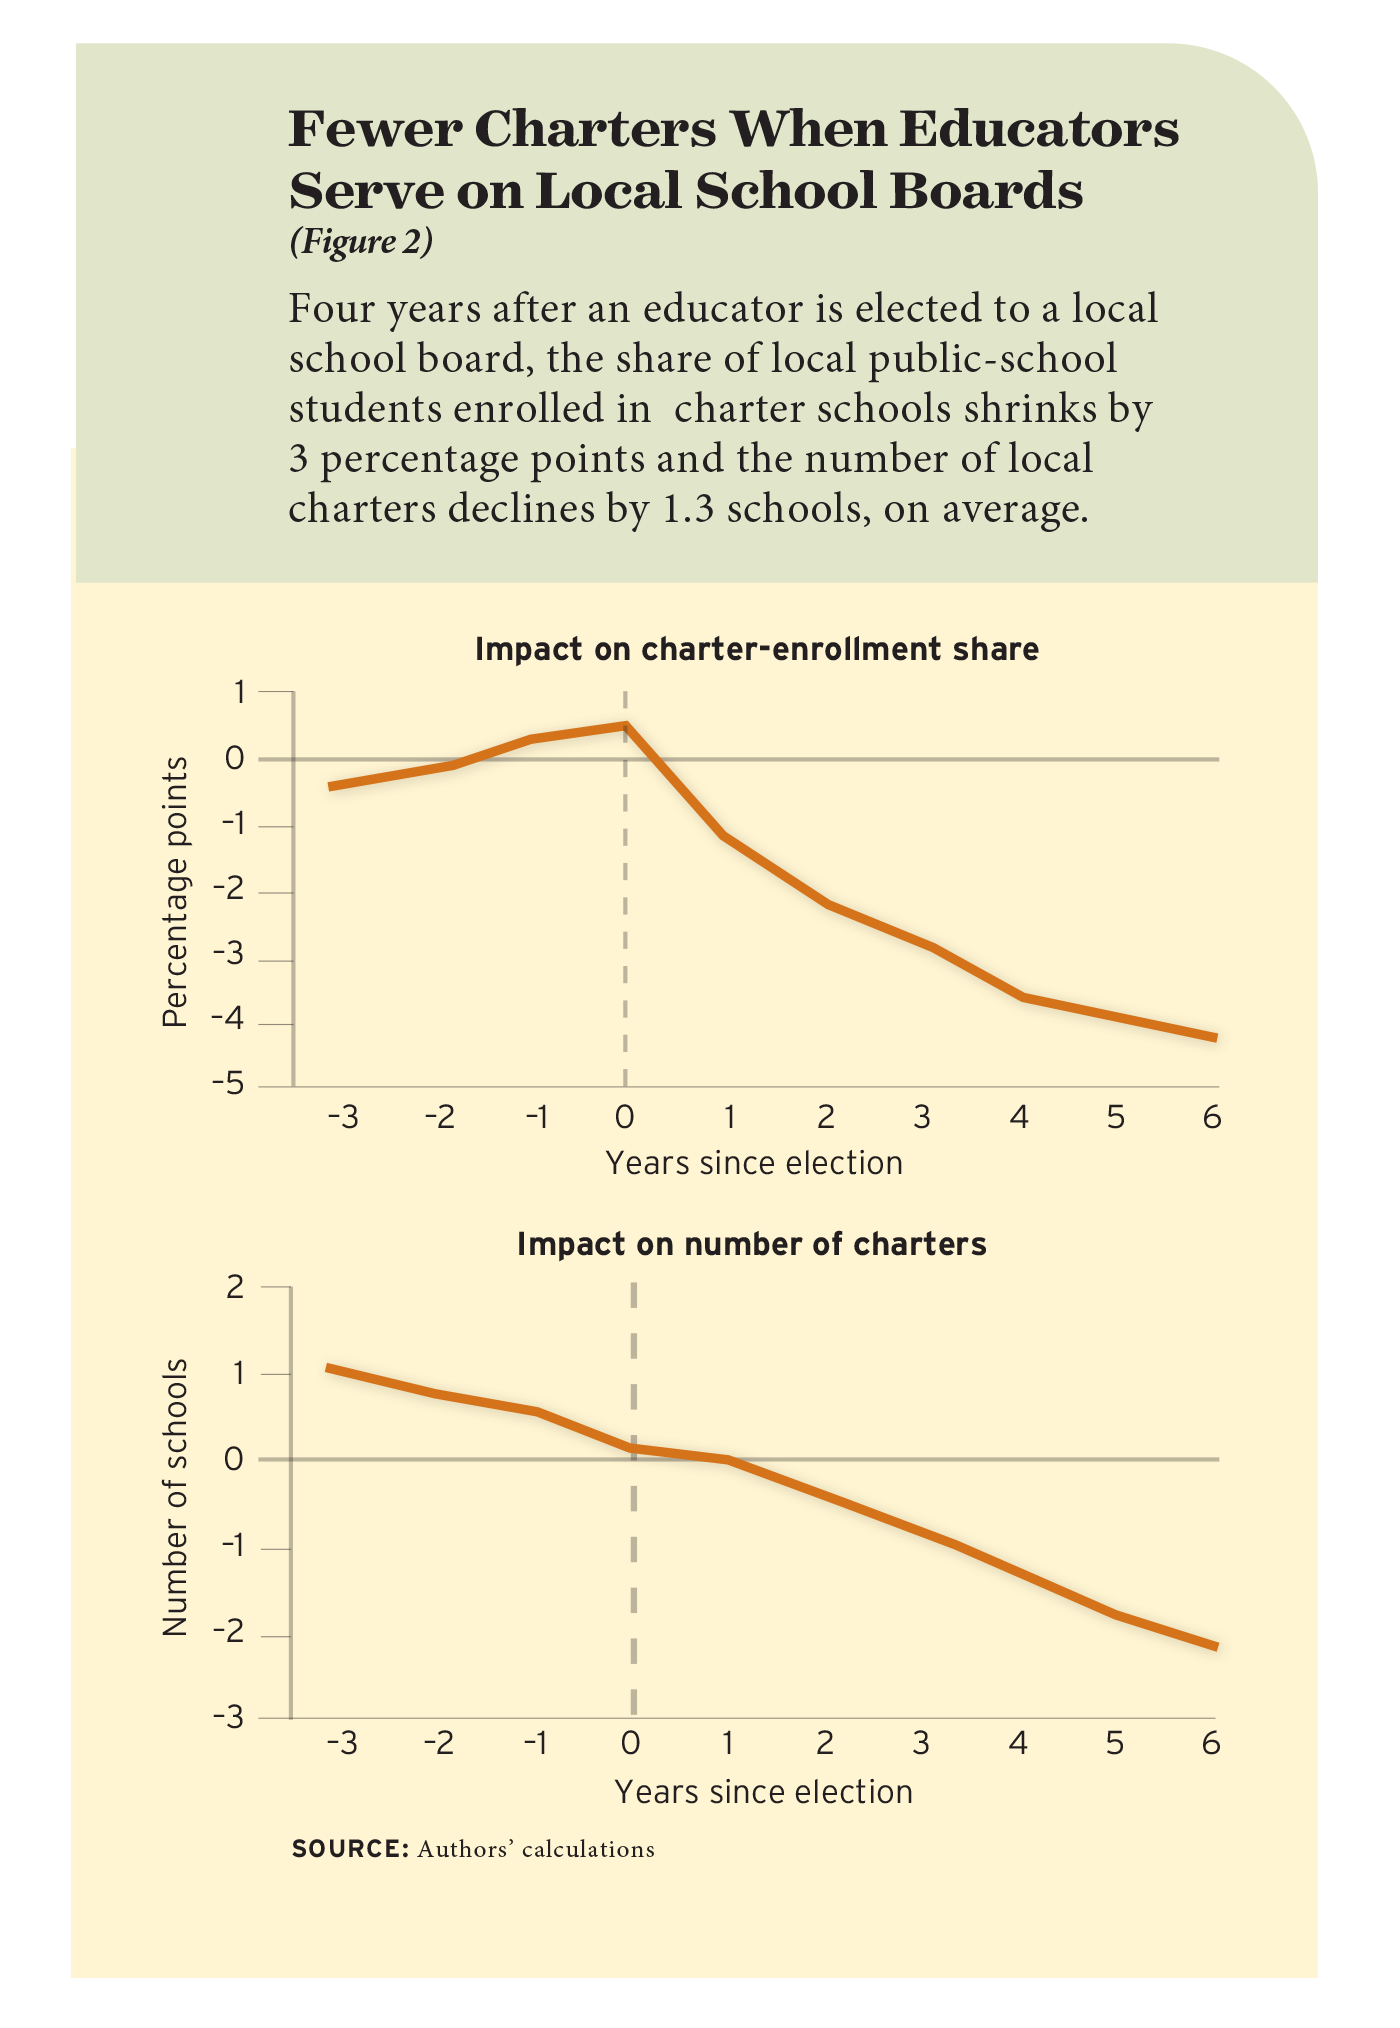 Figure 2: Fewer Charters When Educators Serve on Local School Boards